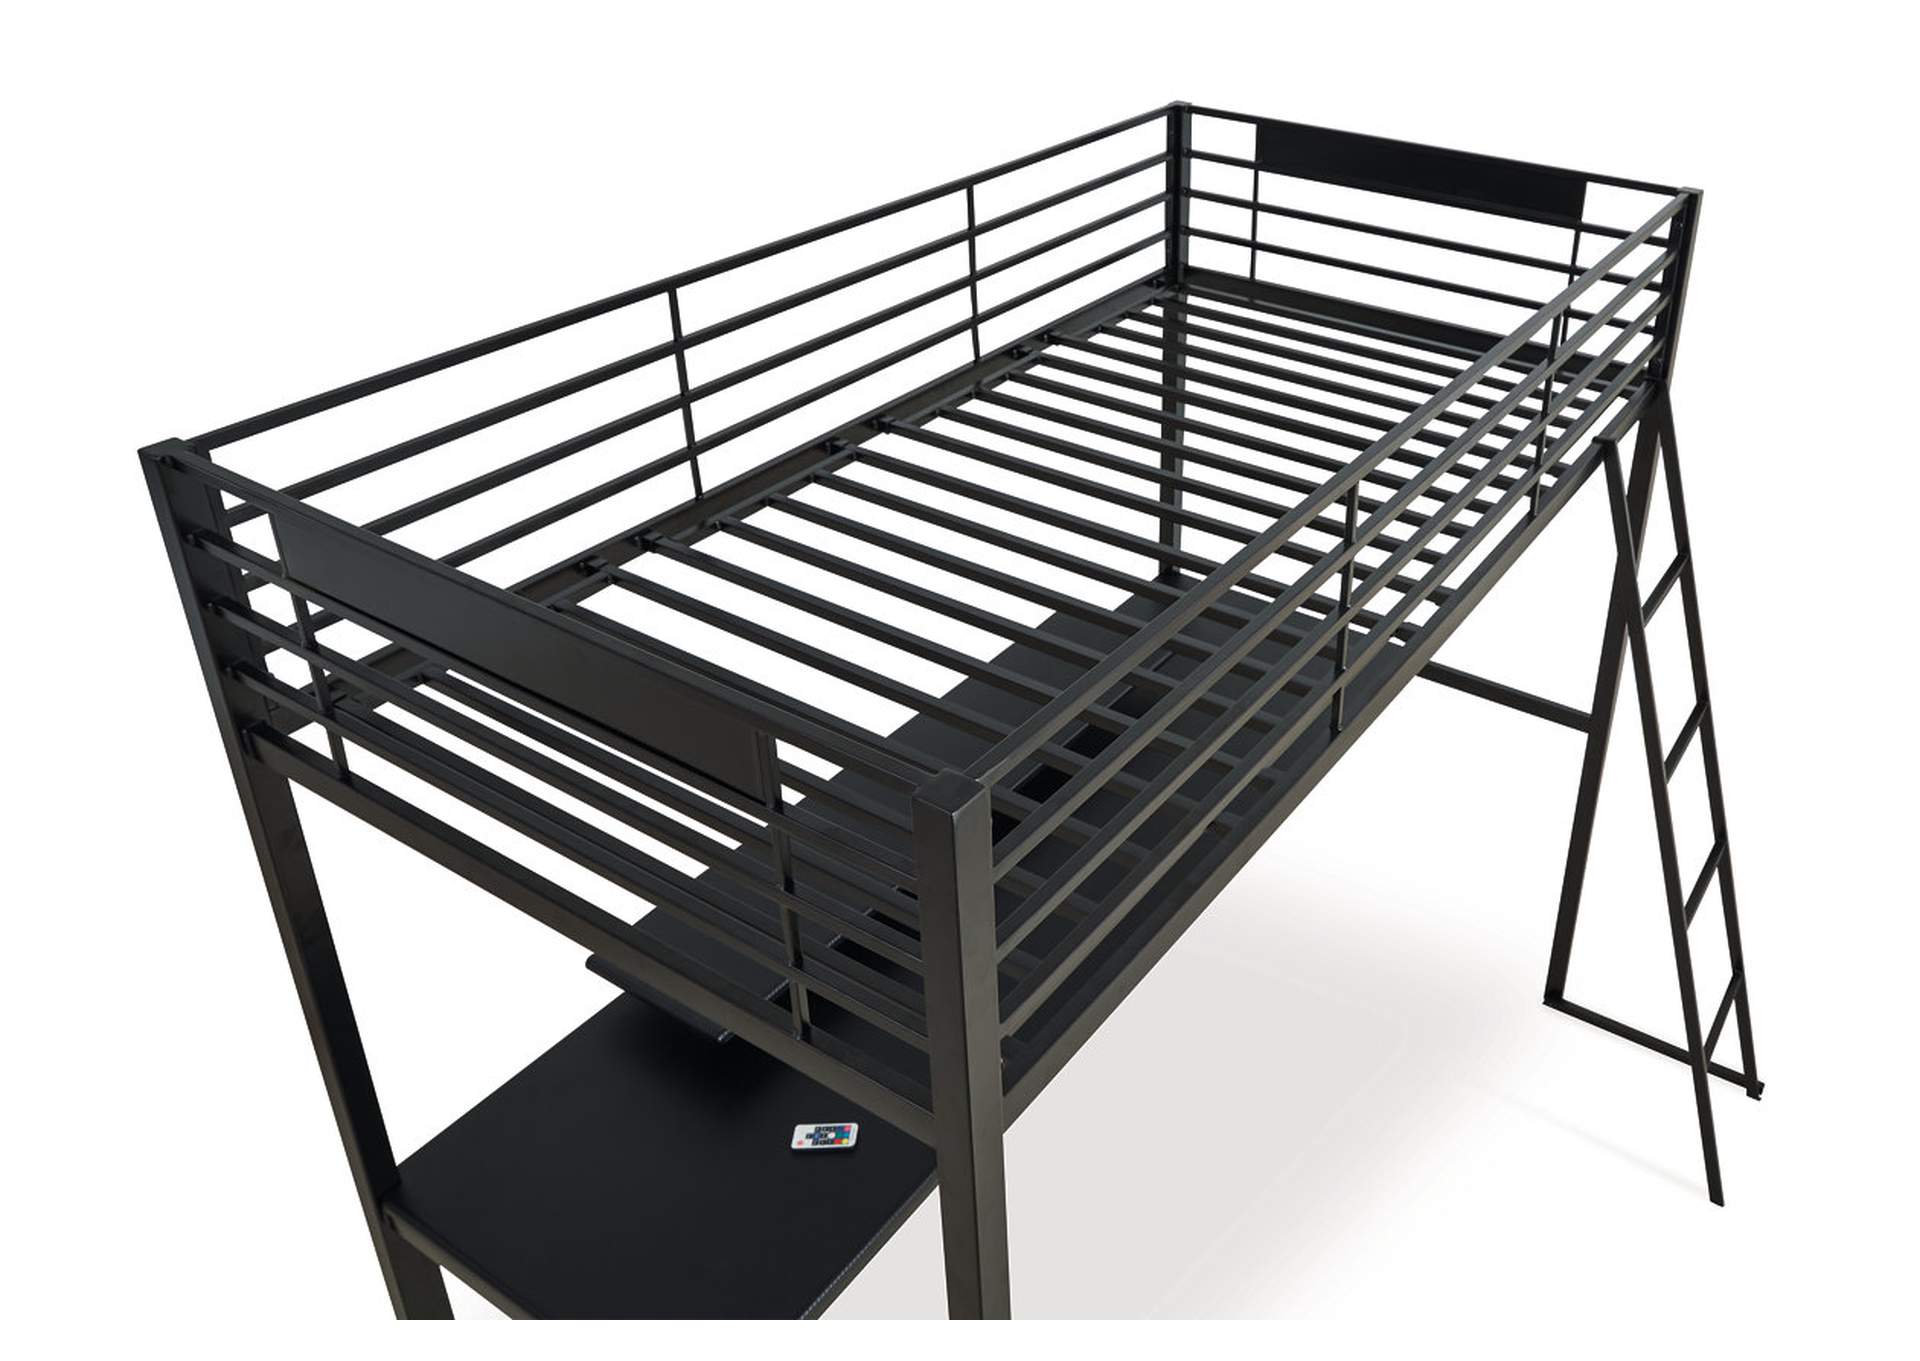 Broshard Twin Loft Bed with Desk,Signature Design By Ashley